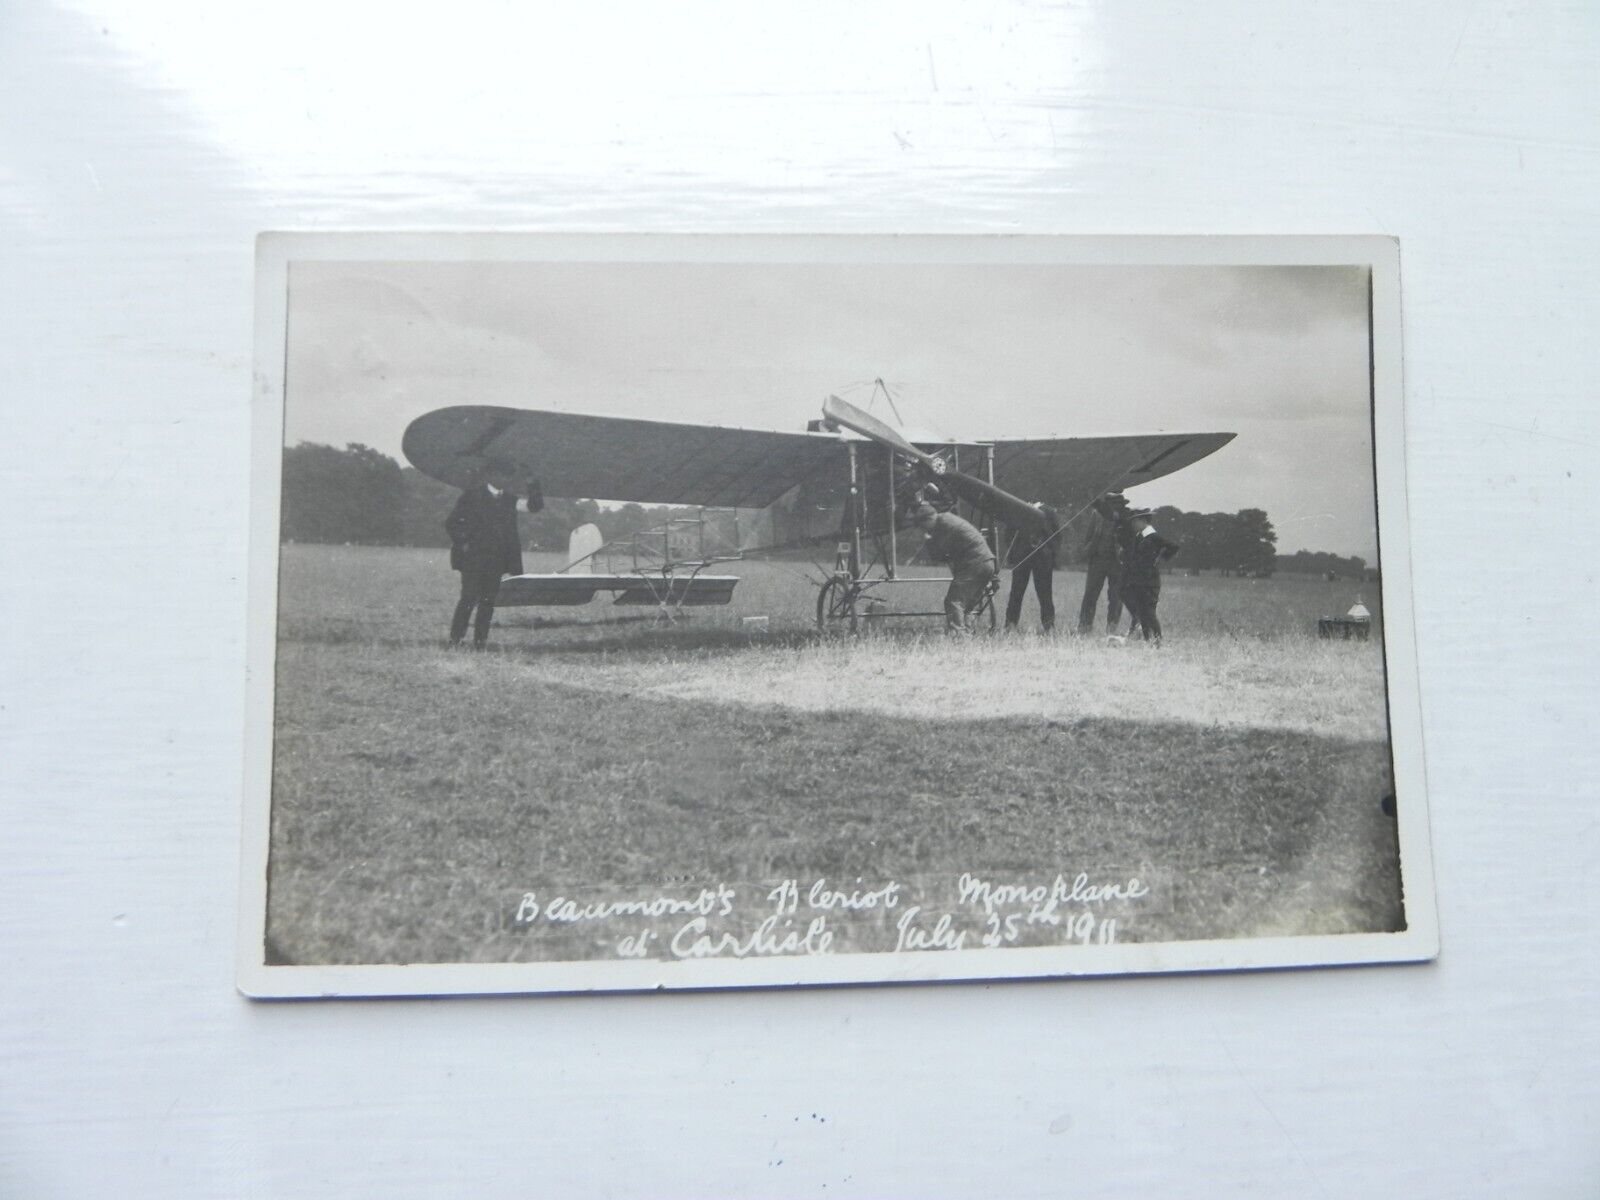 House Clearance - Service Carlisle Monoplane At Carlisle